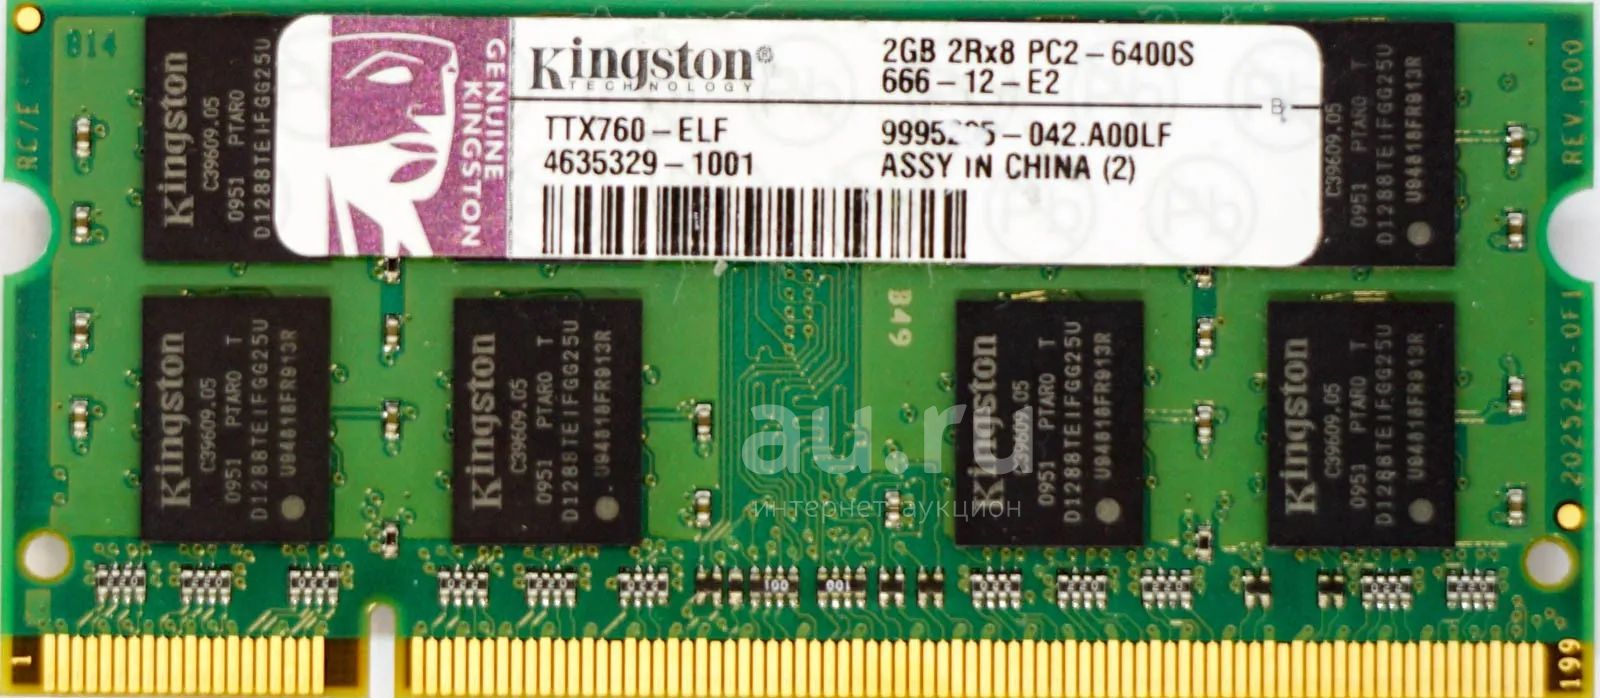 Оперативная память DDR2 для ноутбука Kingston 2gb 2rx8 pc2-6400s 666-12-e2  — купить в Красноярске. Состояние: Б/у. Оперативная память на  интернет-аукционе Au.ru